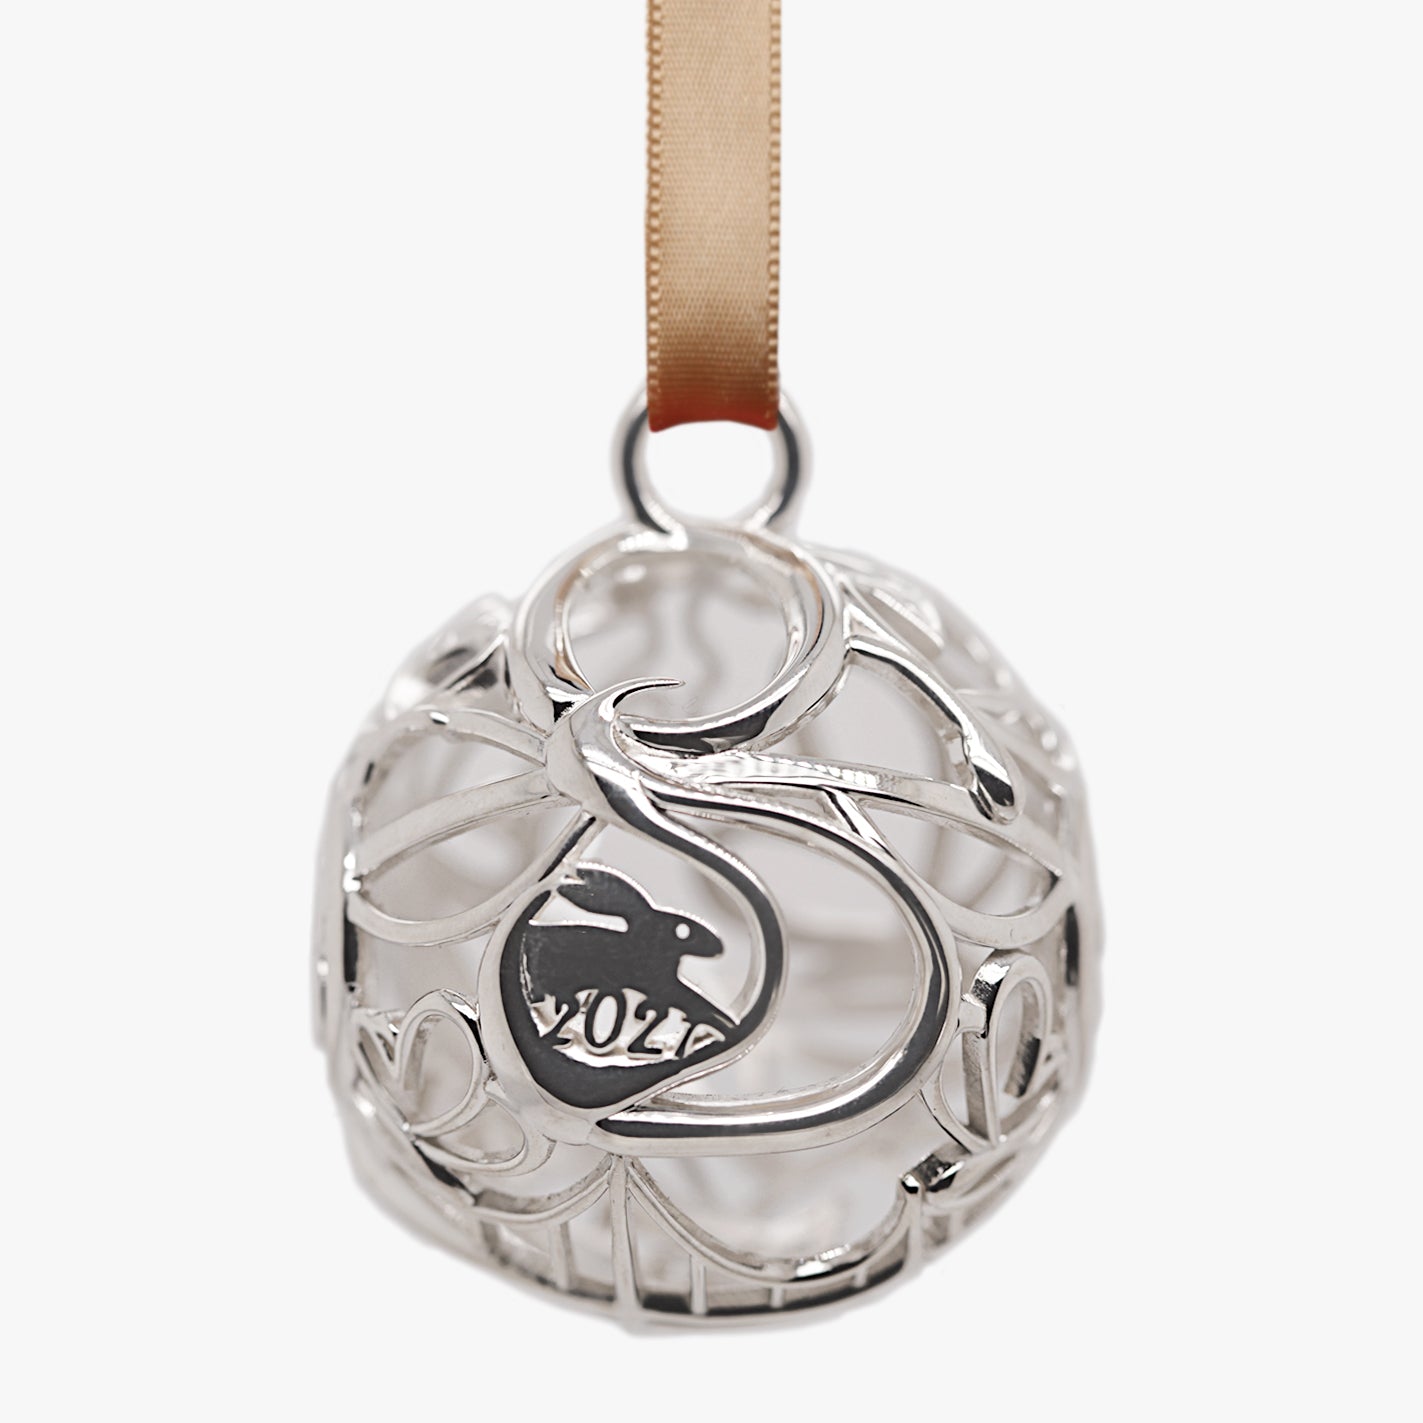 2021 Greenville Sphere Ornament in Sterling Silver